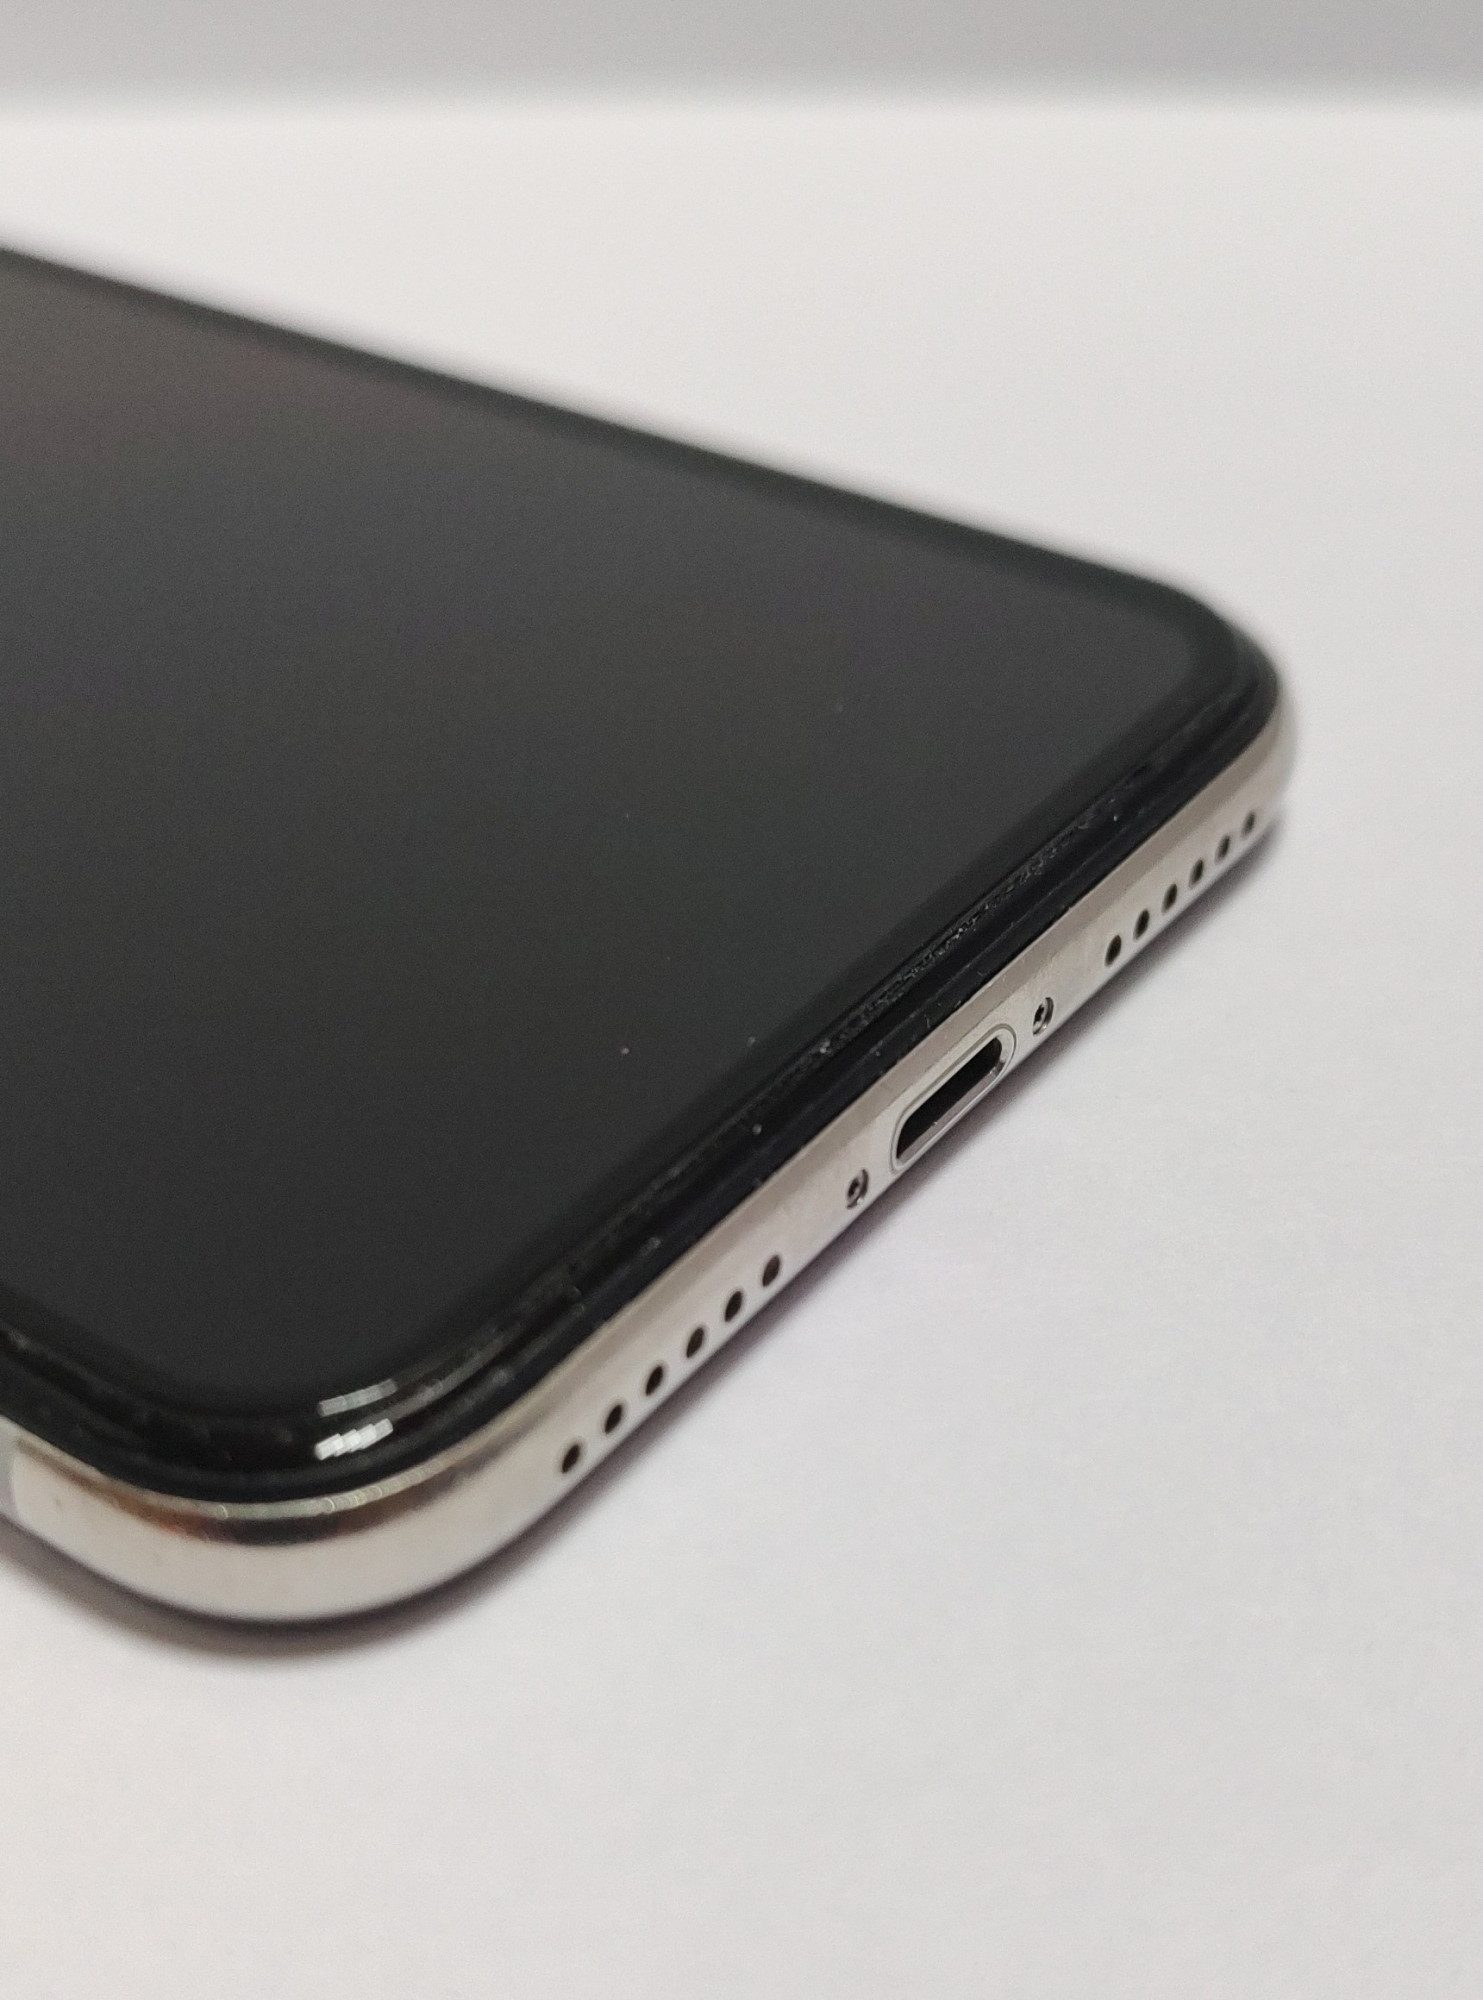 Apple iPhone X 256Gb Silver 4